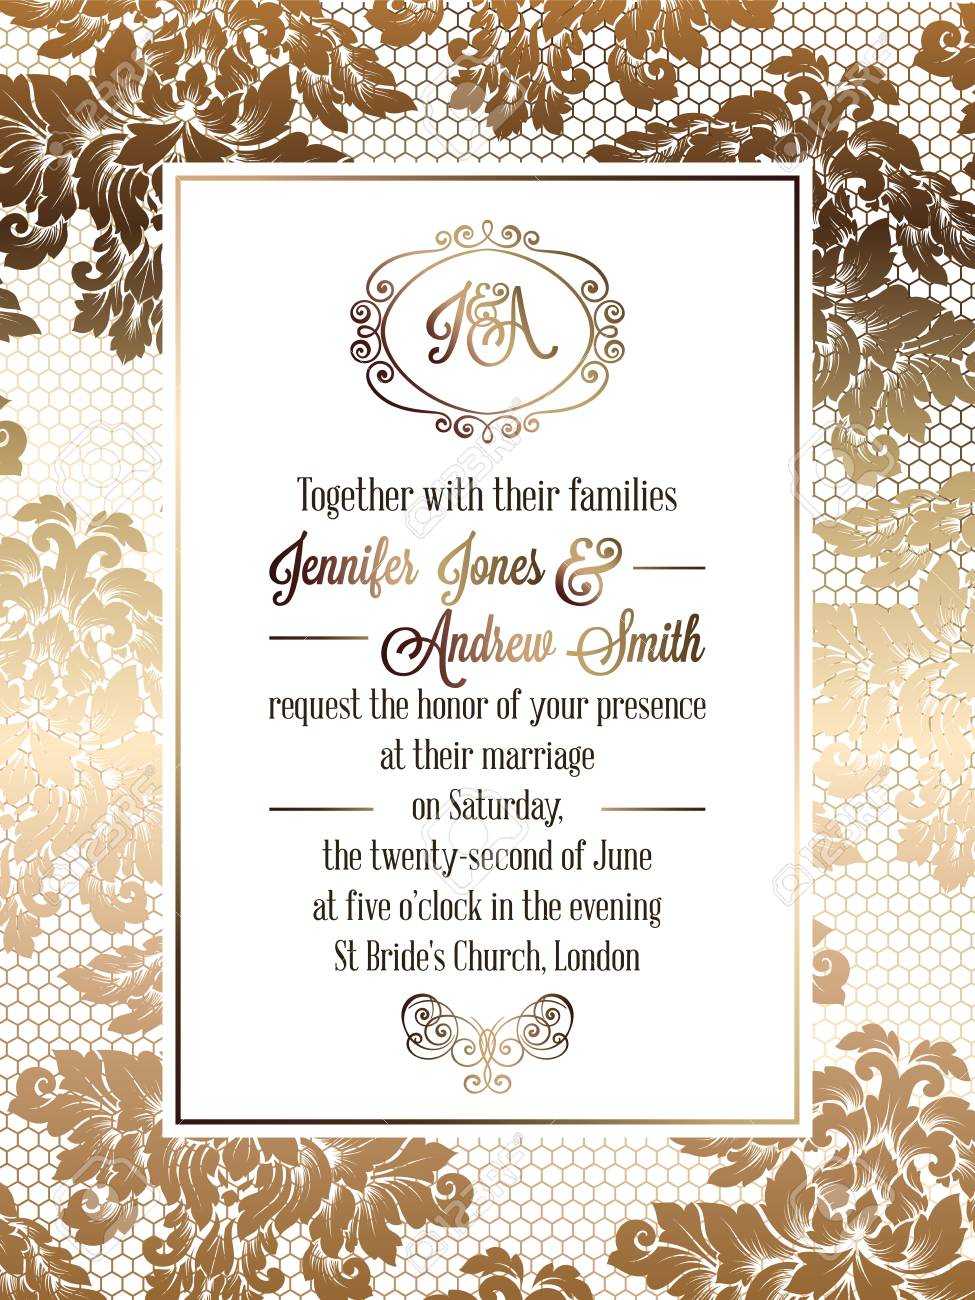 Vintage Baroque Style Wedding Invitation Card Template.. Elegant.. In Free E Wedding Invitation Card Templates